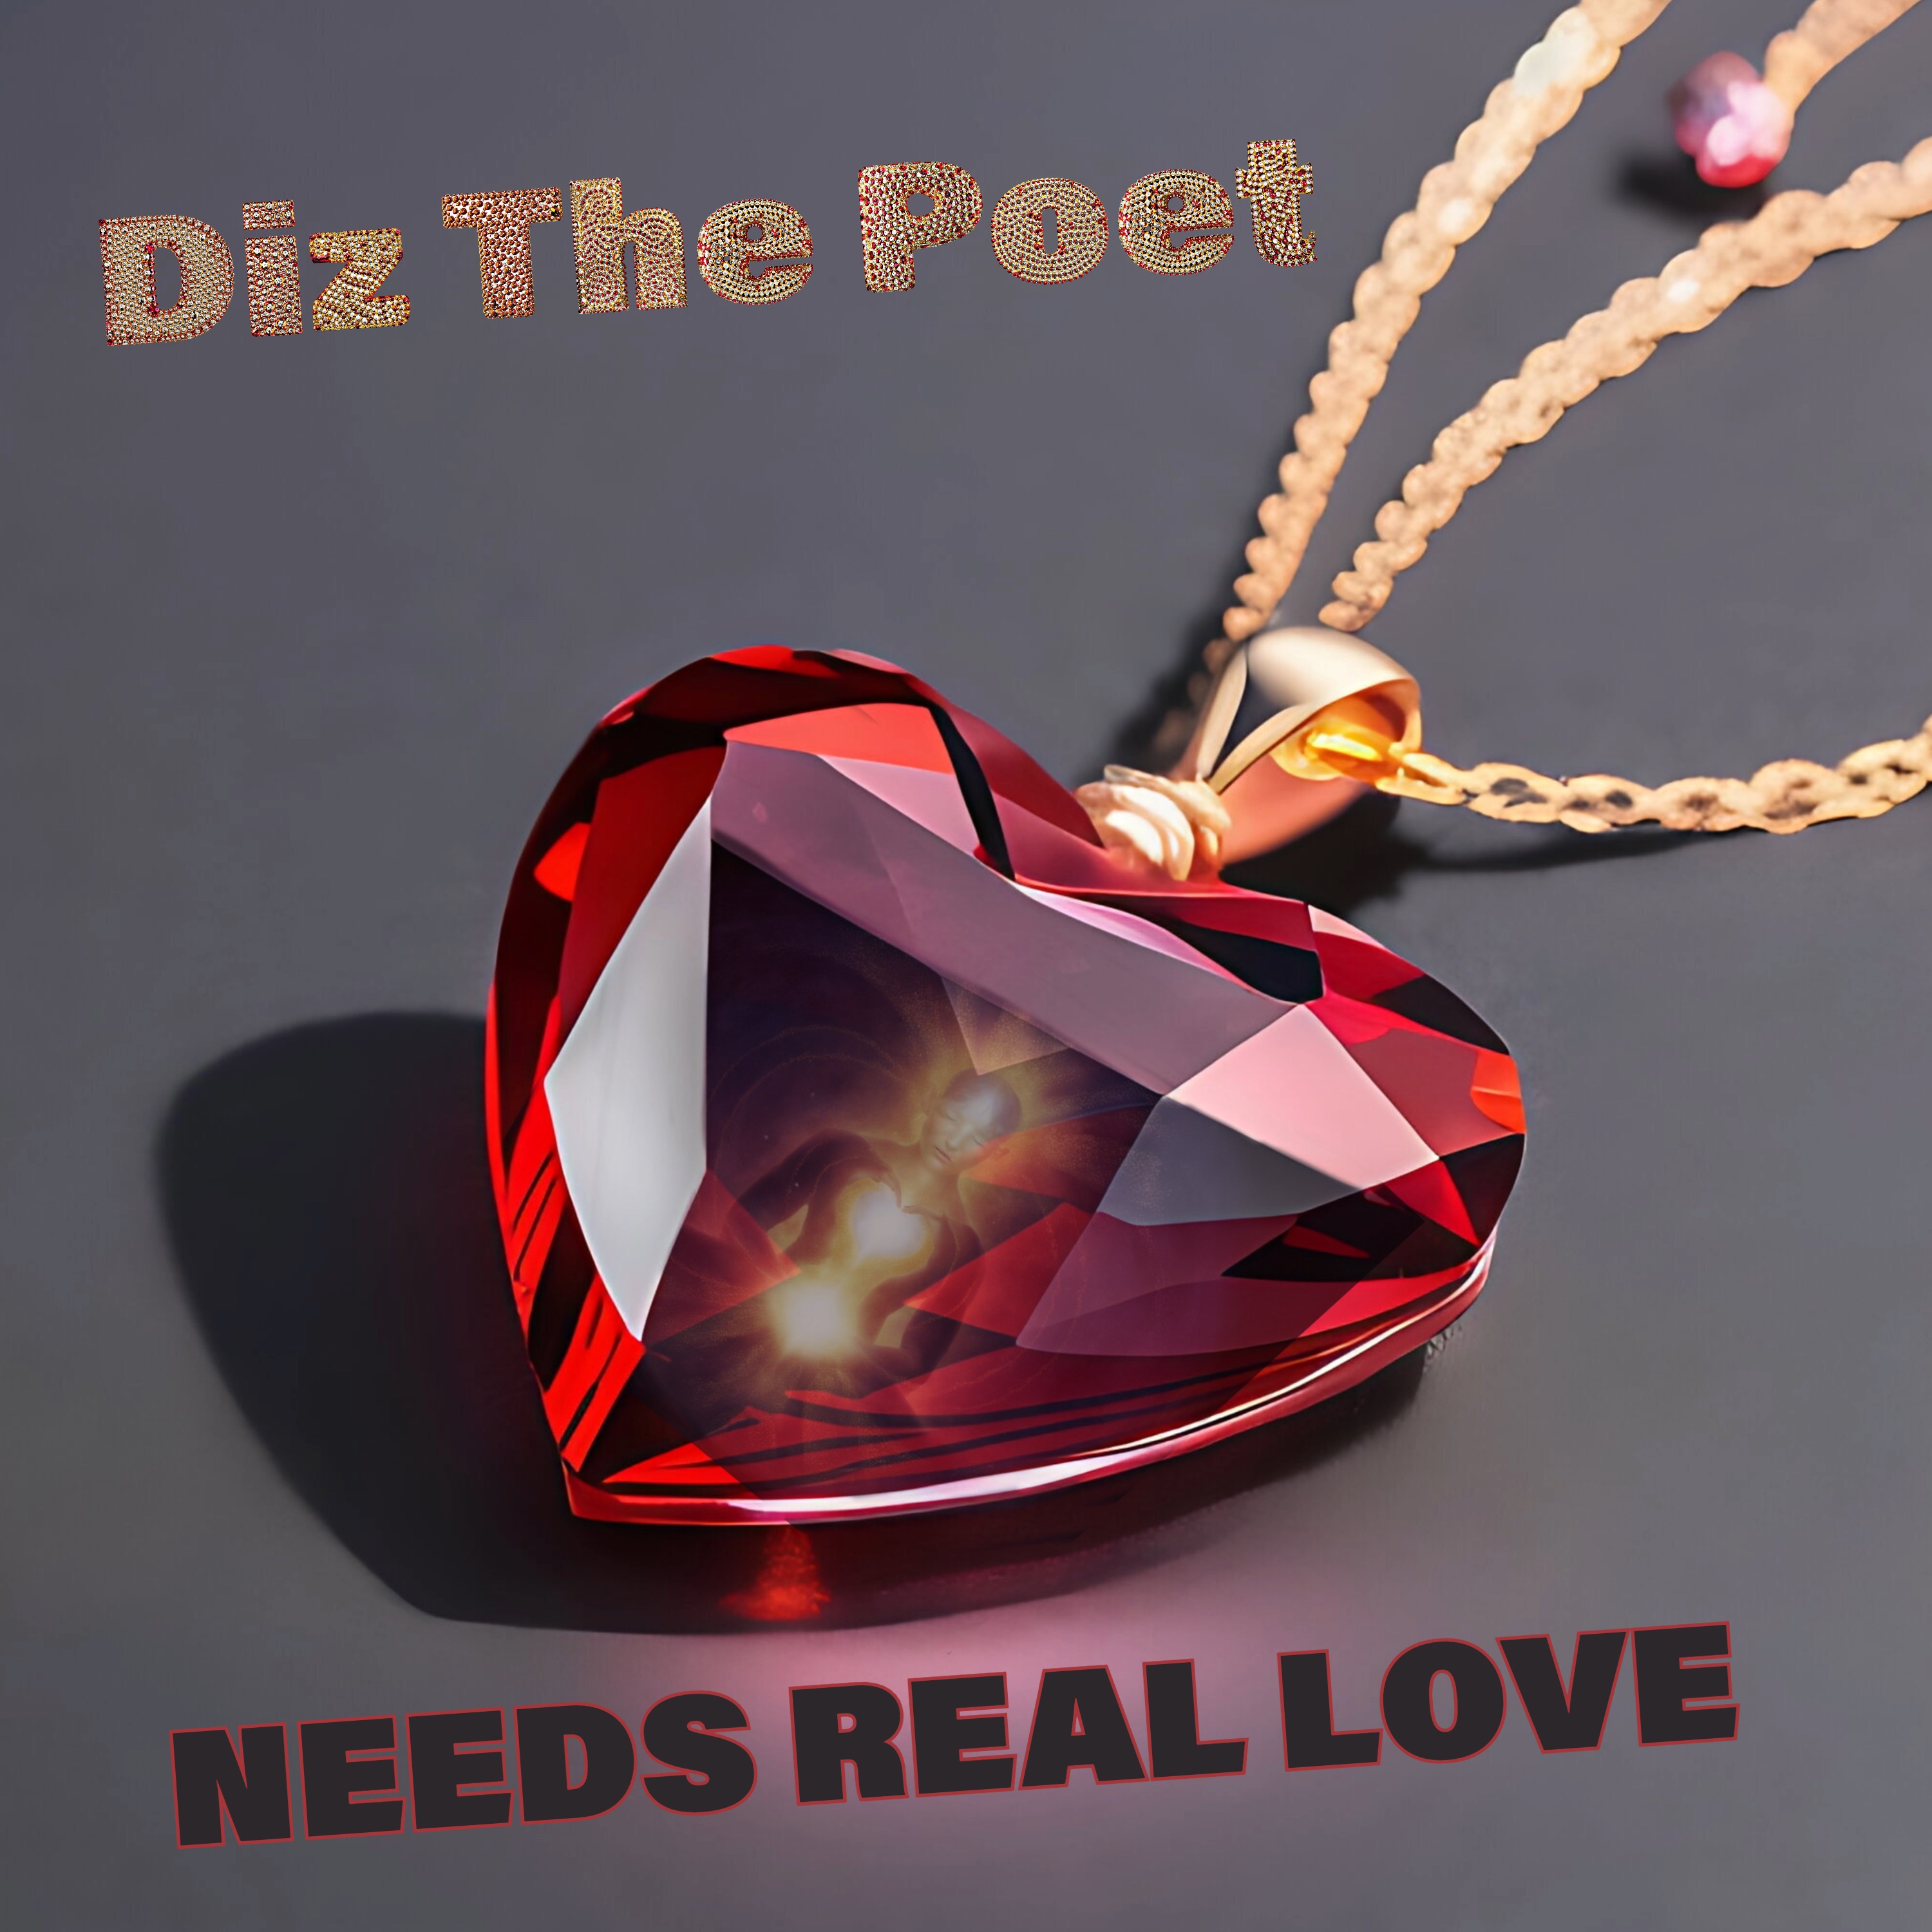 Art for Needs Real Love by Diz The Poet